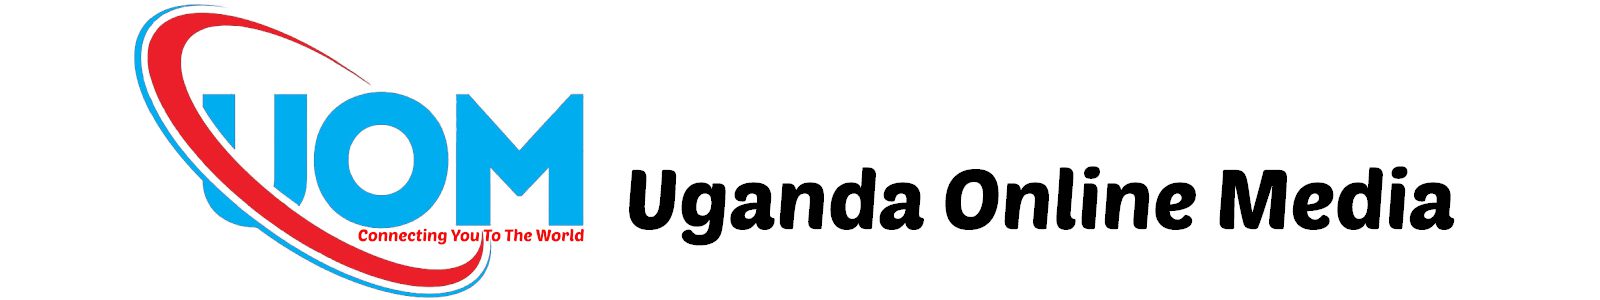 Uganda Online Media